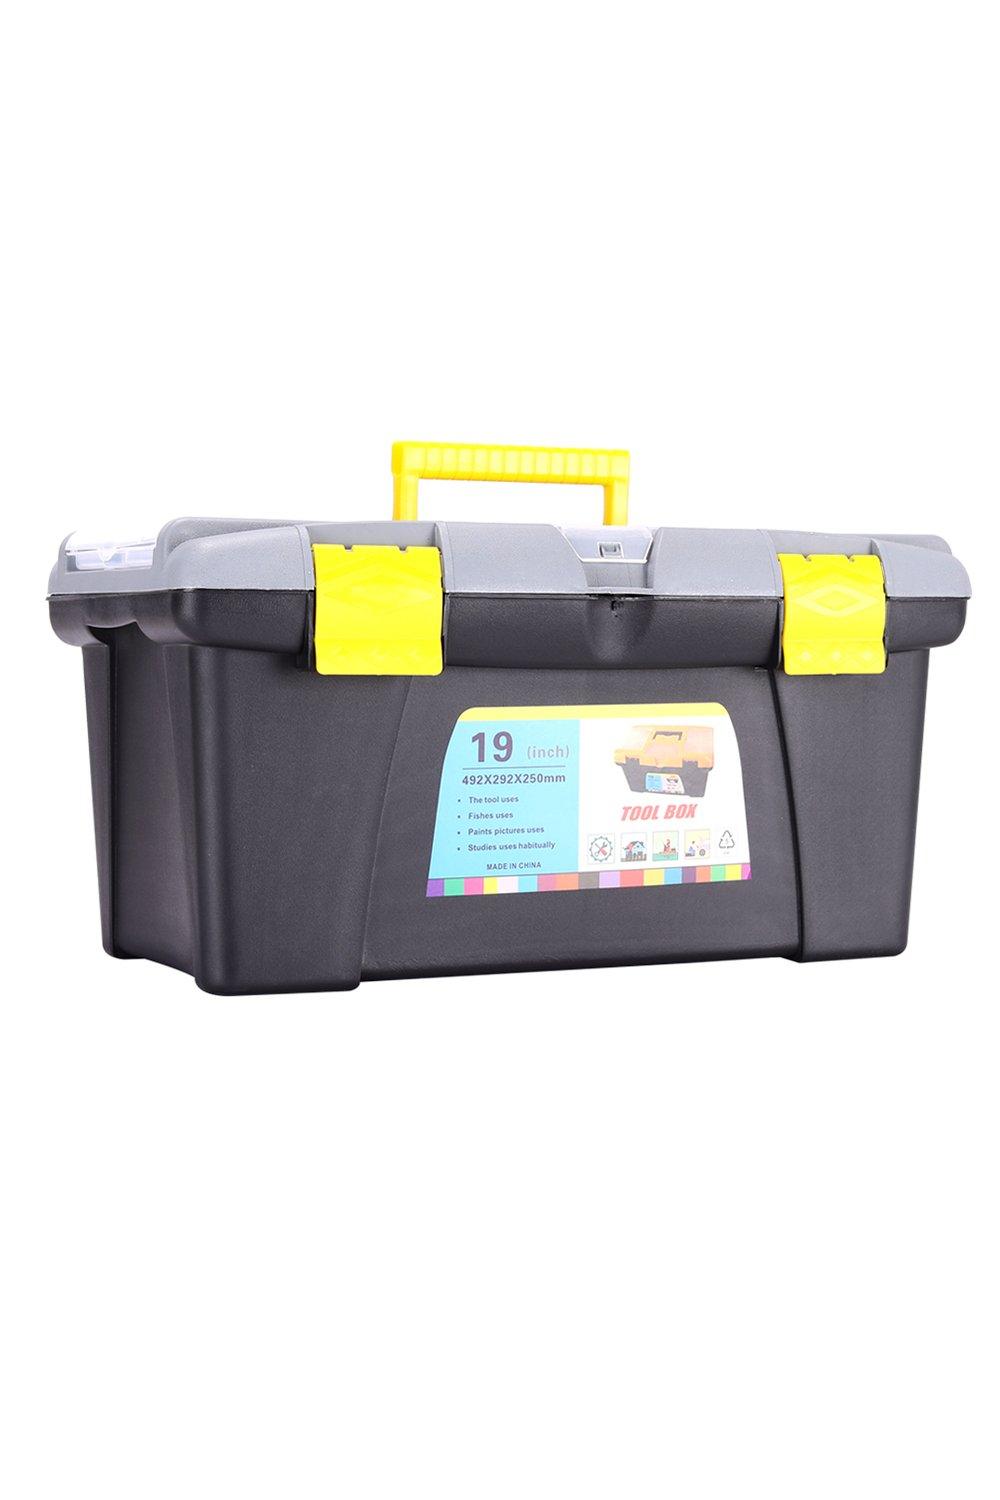 Plastic Tool Storage Box Organizer Lockable Case Removable Tray